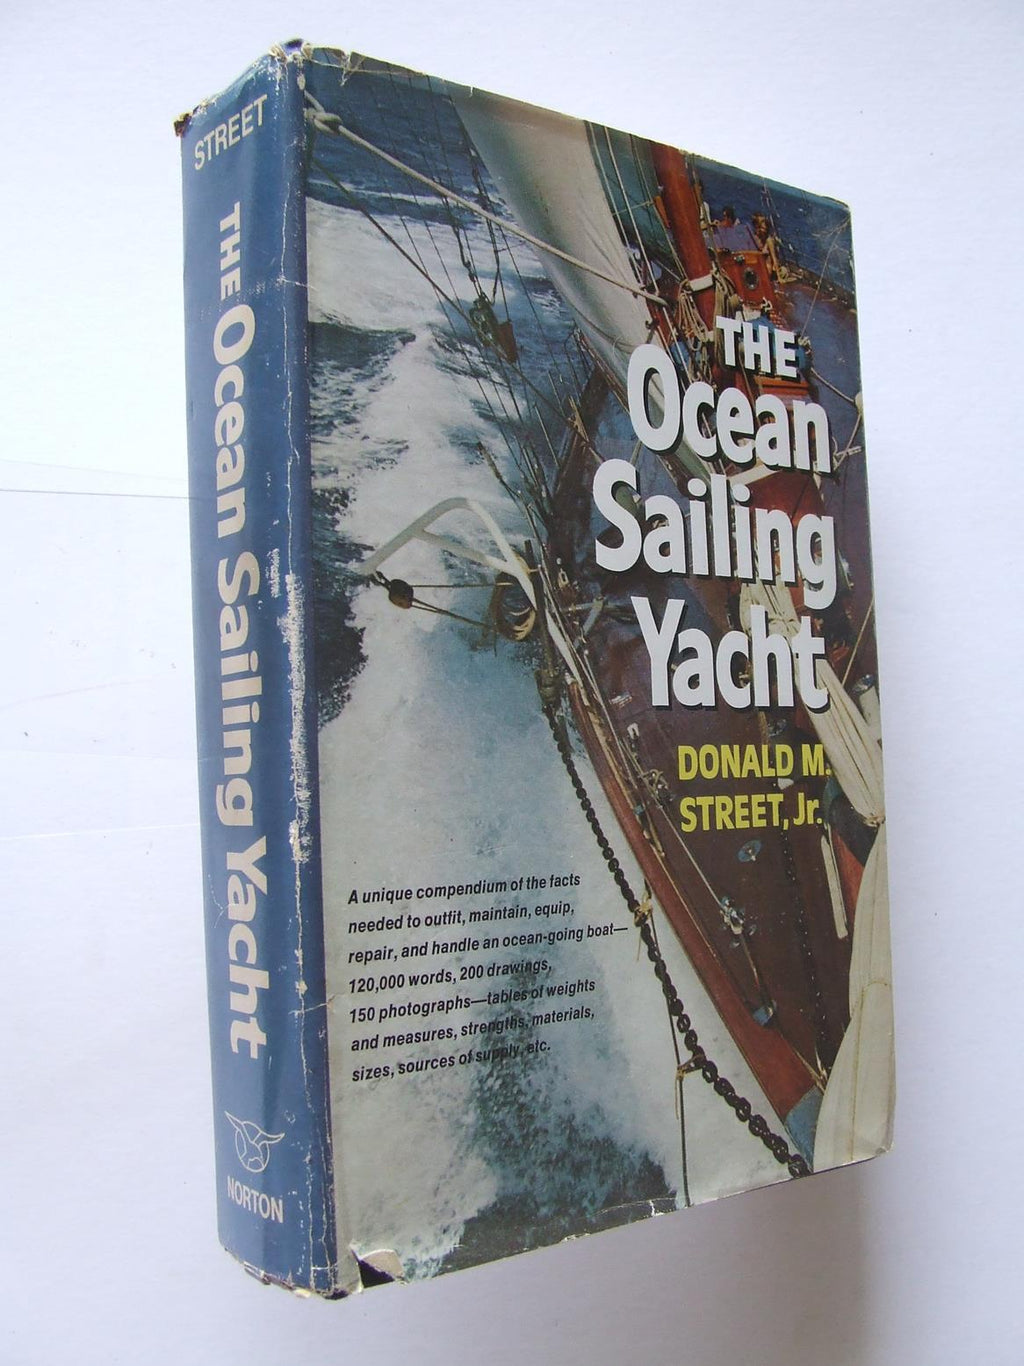 The Ocean Sailing Yacht / The Ocean Sailing Yacht, volume 2